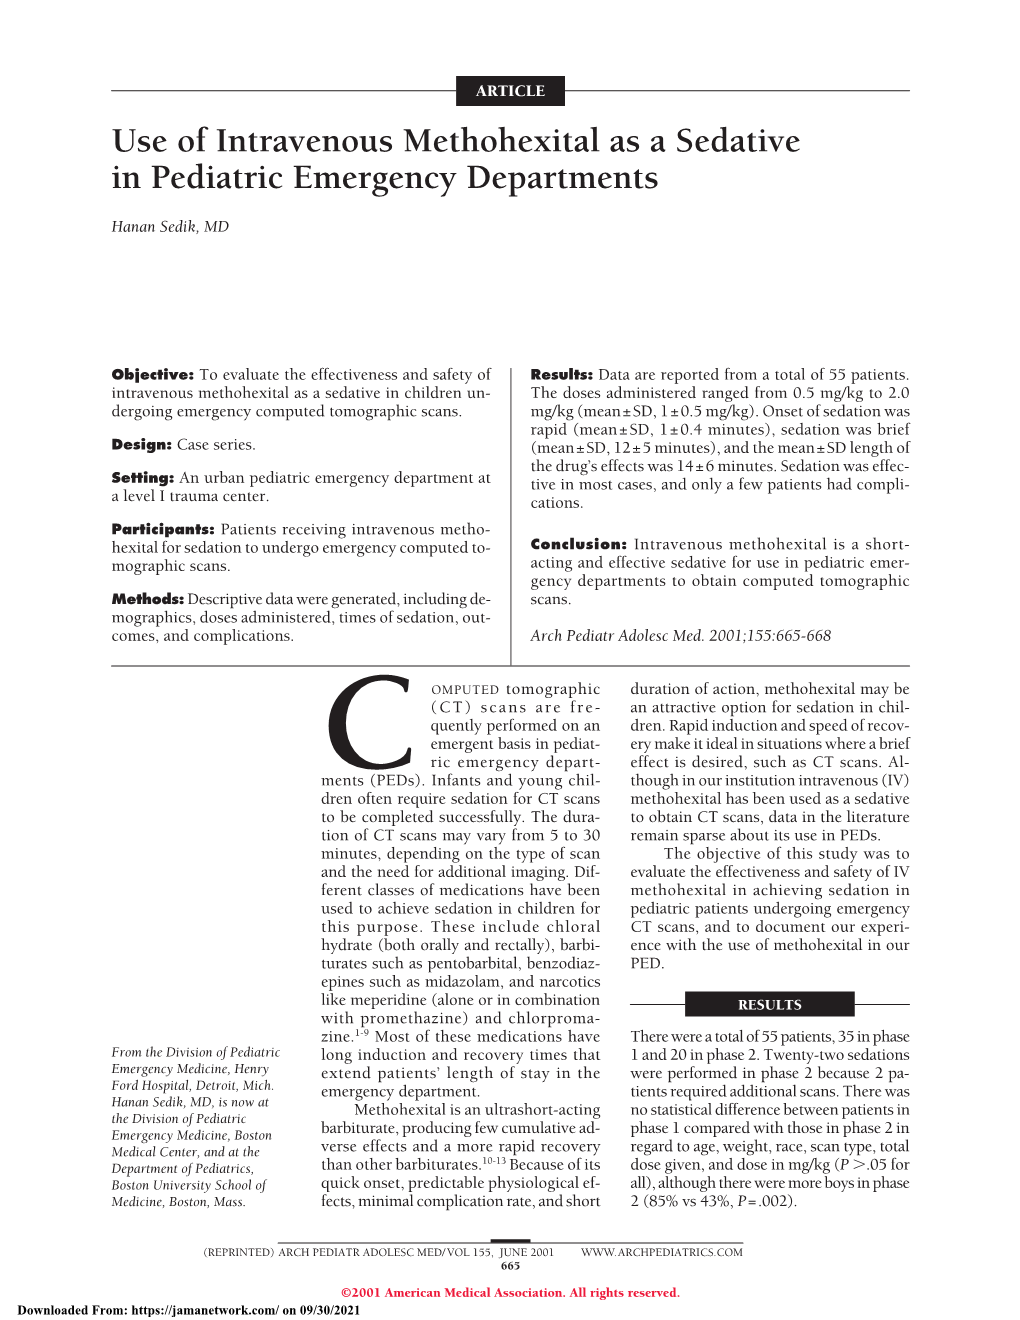 Use of Intravenous Methohexital As a Sedative in Pediatric Emergency Departments